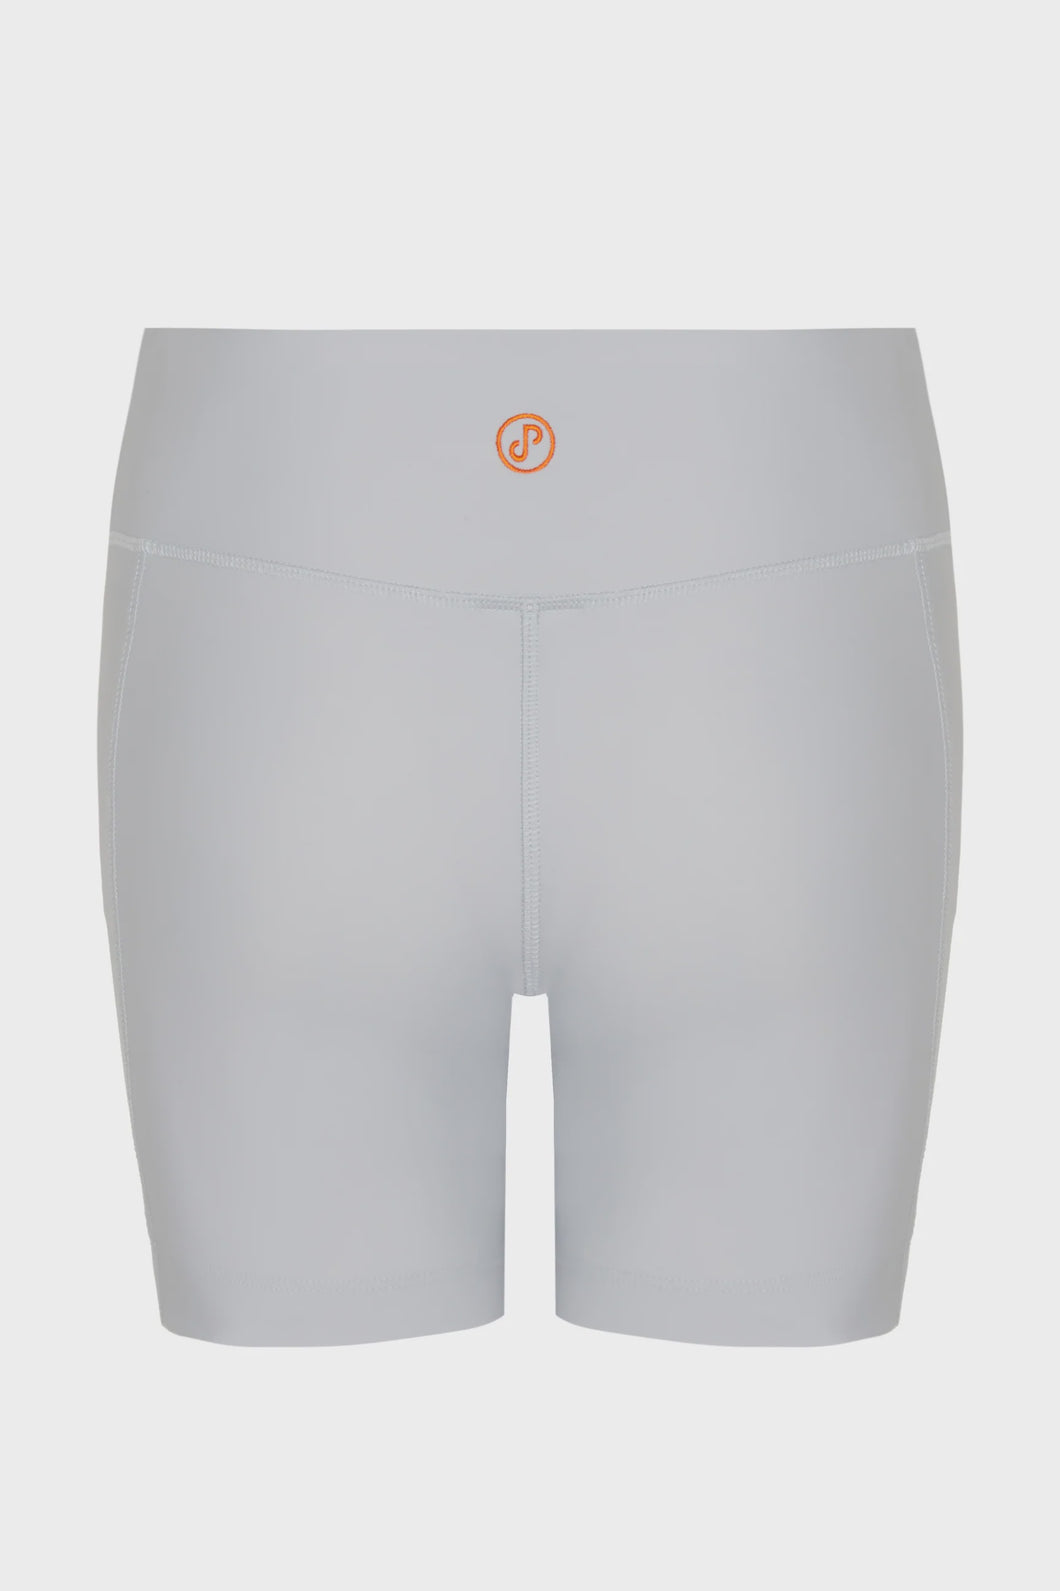 Atman Shorts - Silver Grey